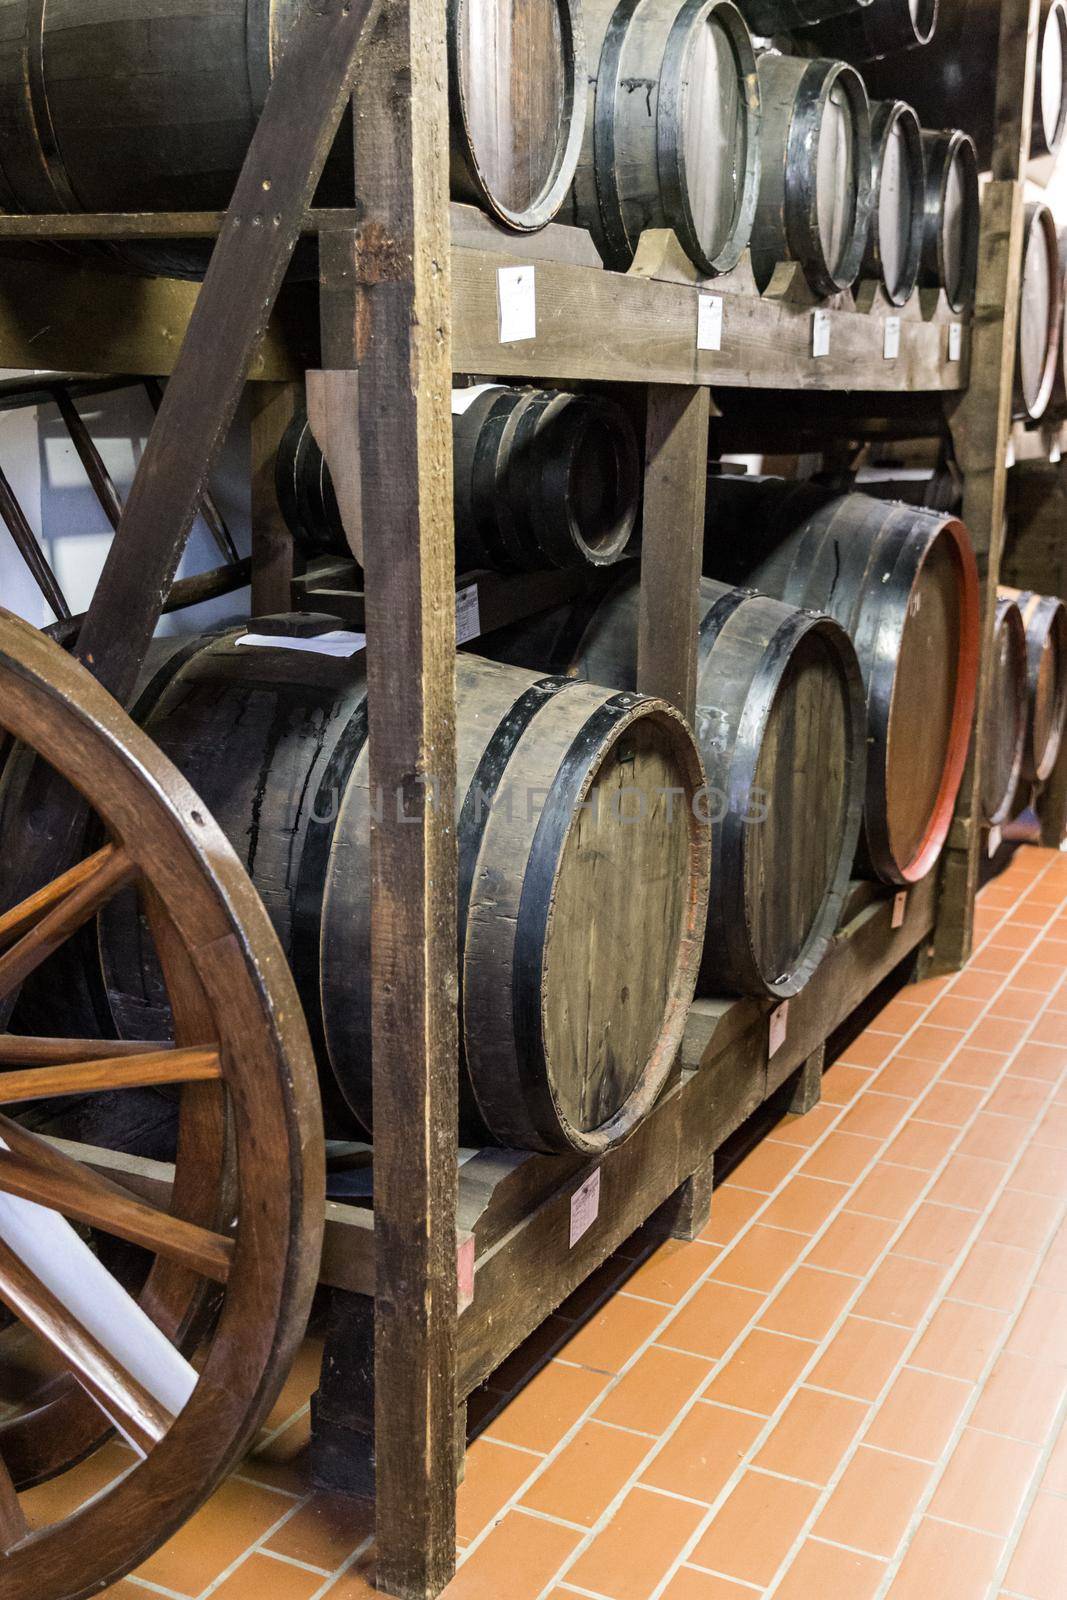 balsamic vinegar barrels storing and aging